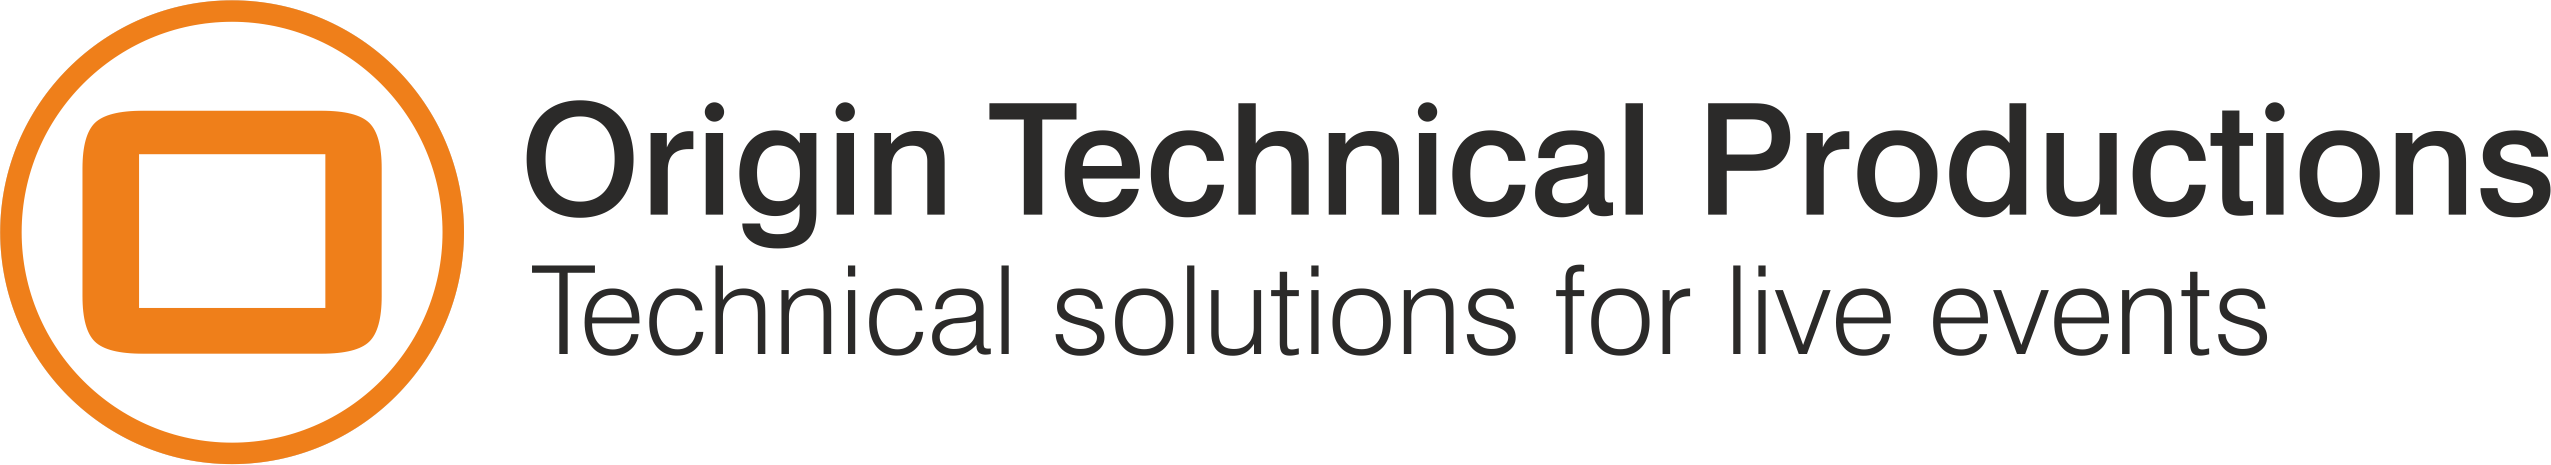 Origin Technical Productions Logo